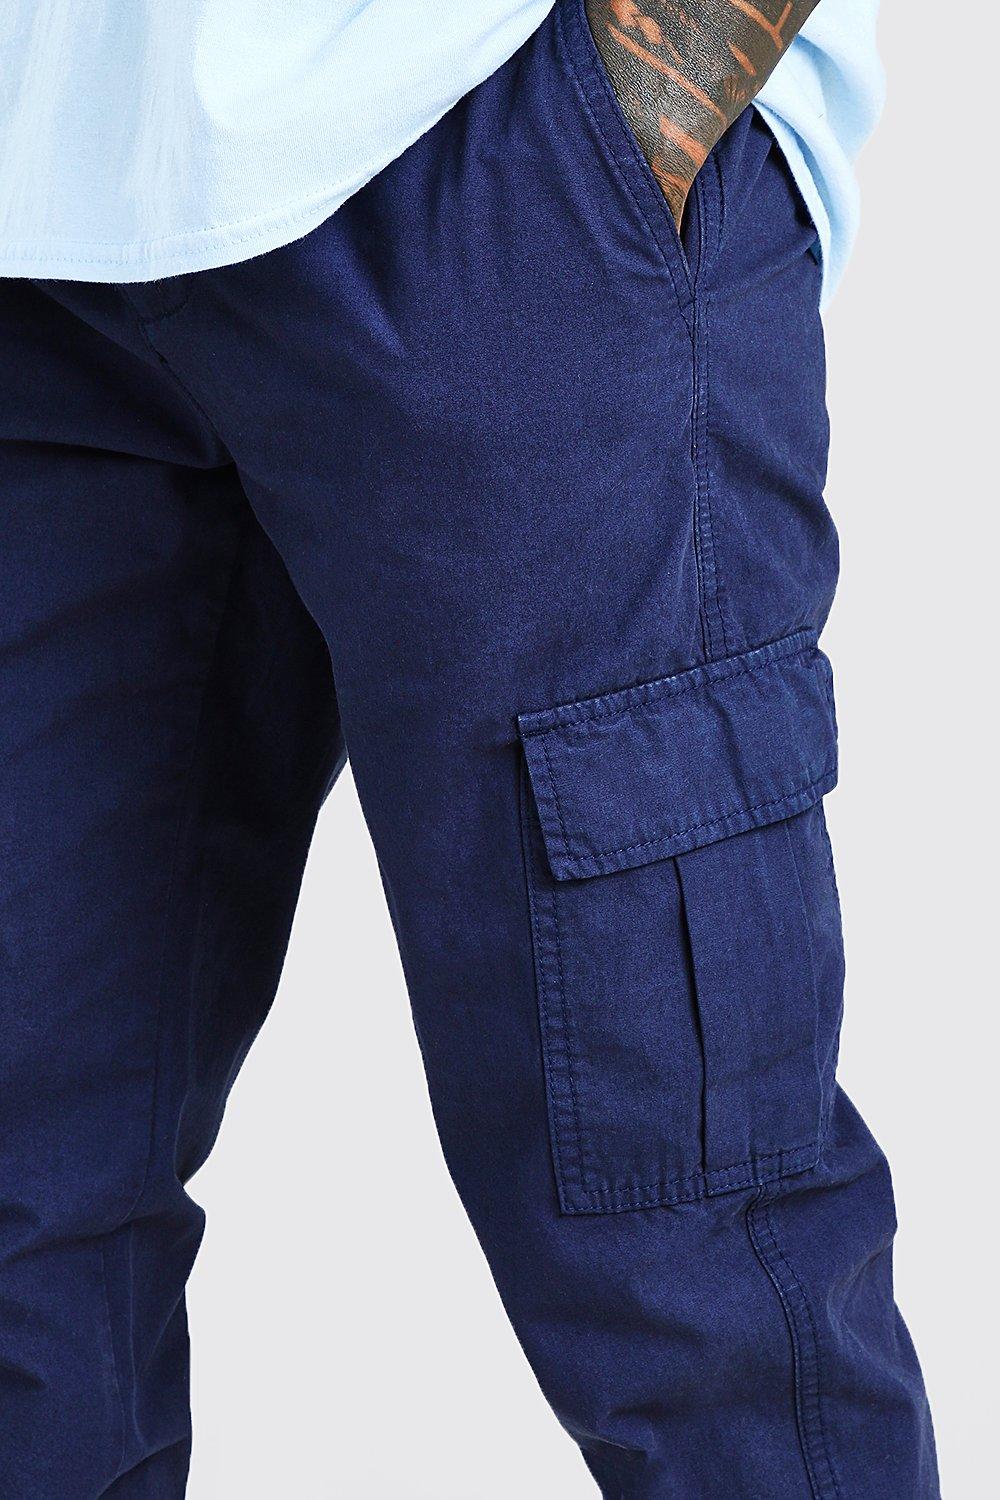 slim fit navy blue cargo pants